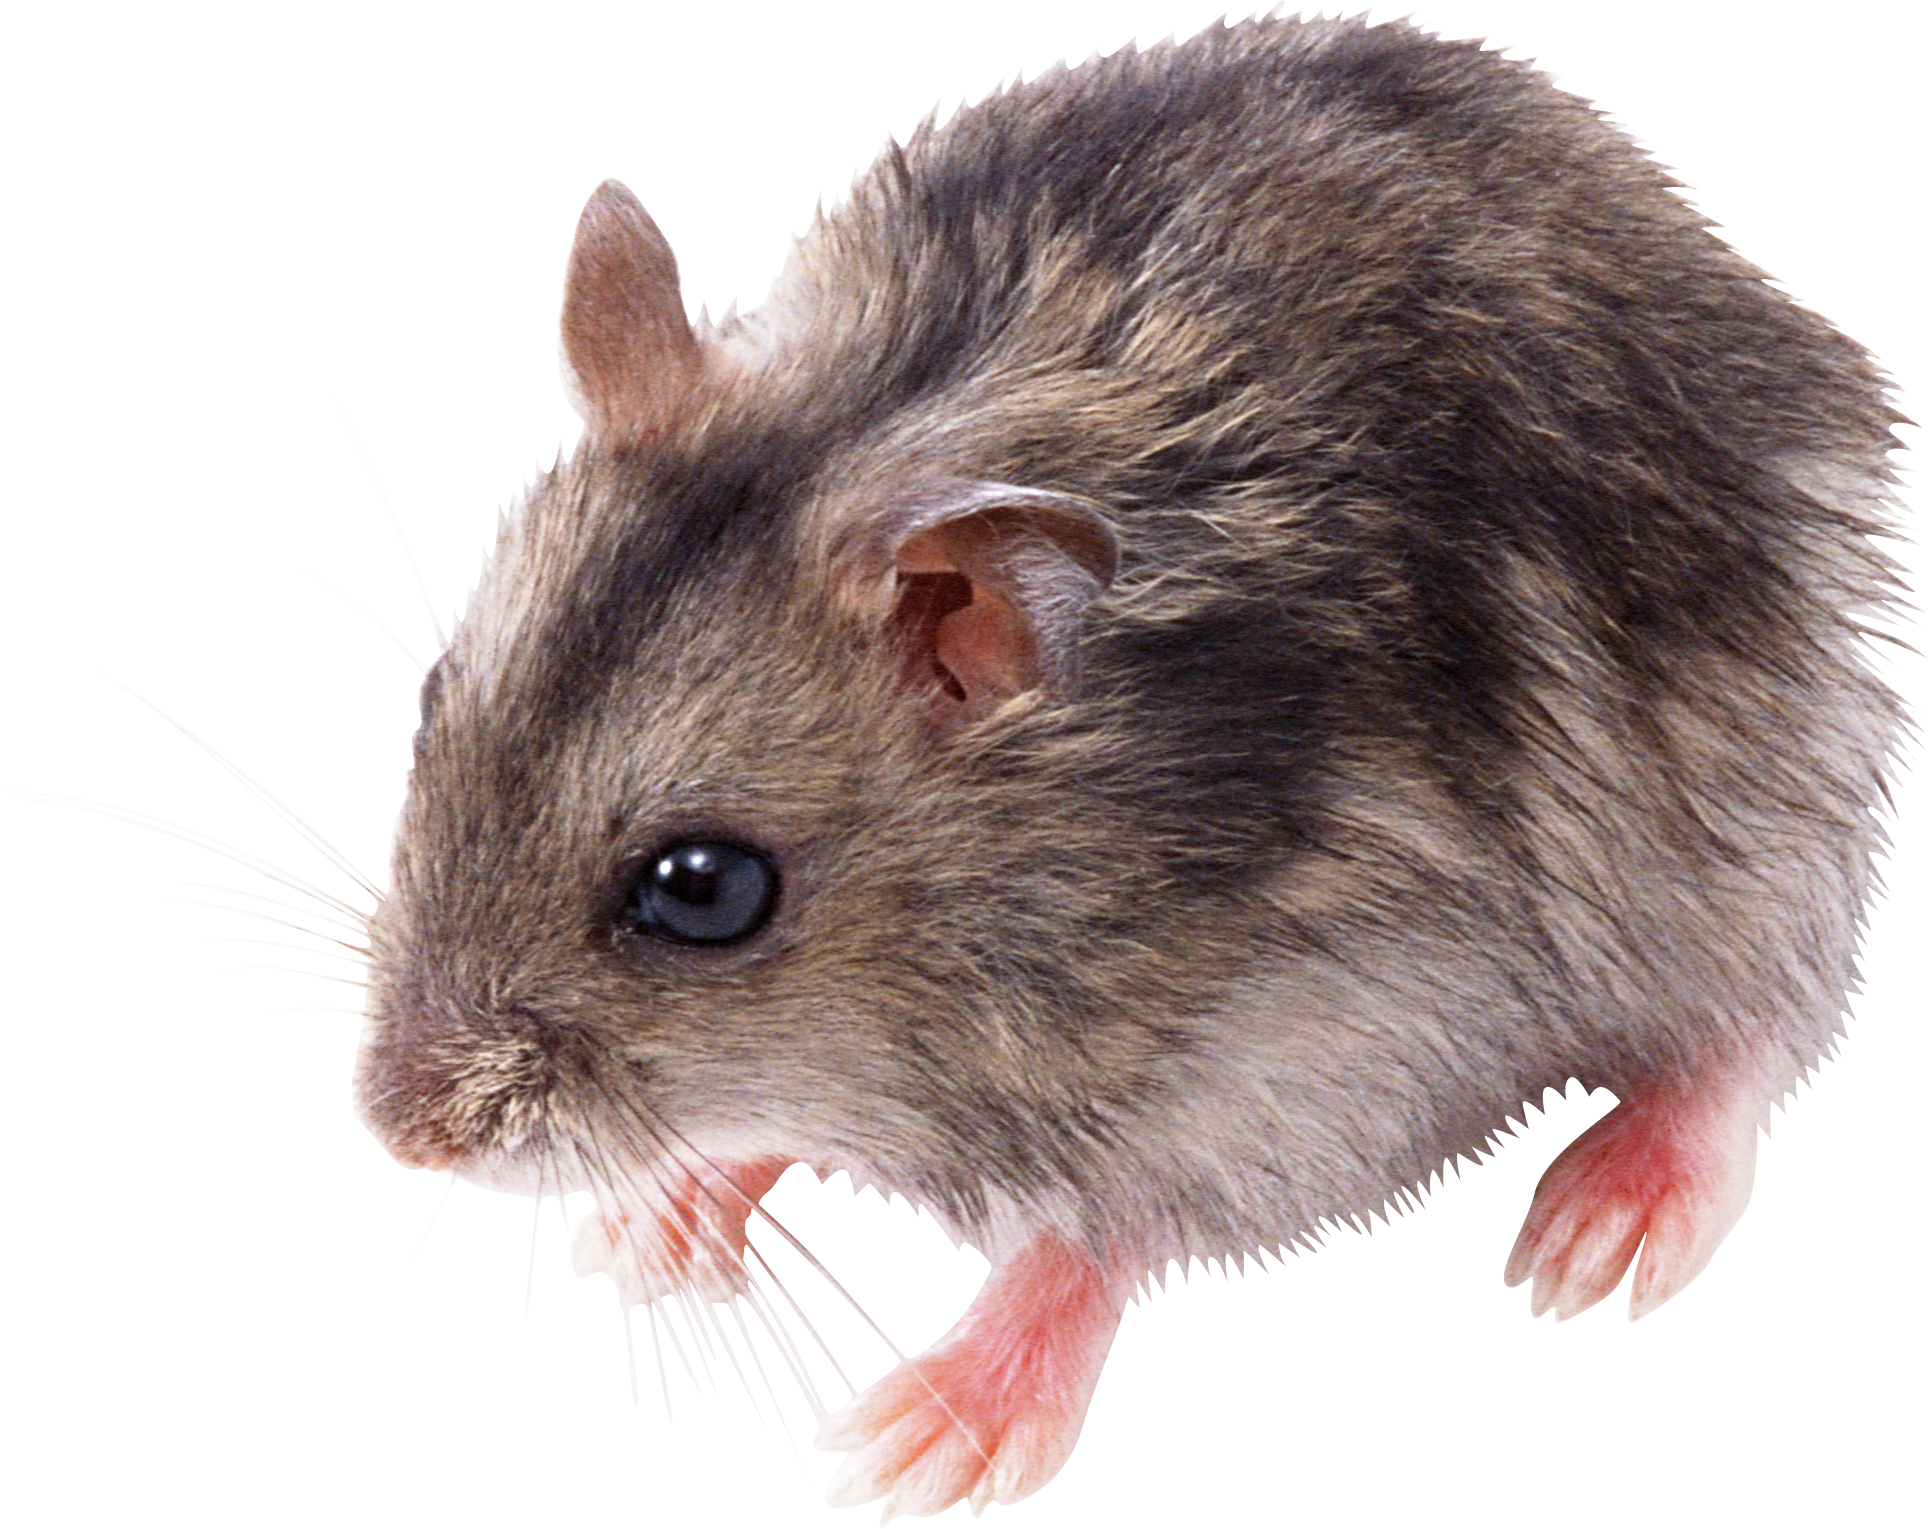 Mice u0026 Rats commonly foun